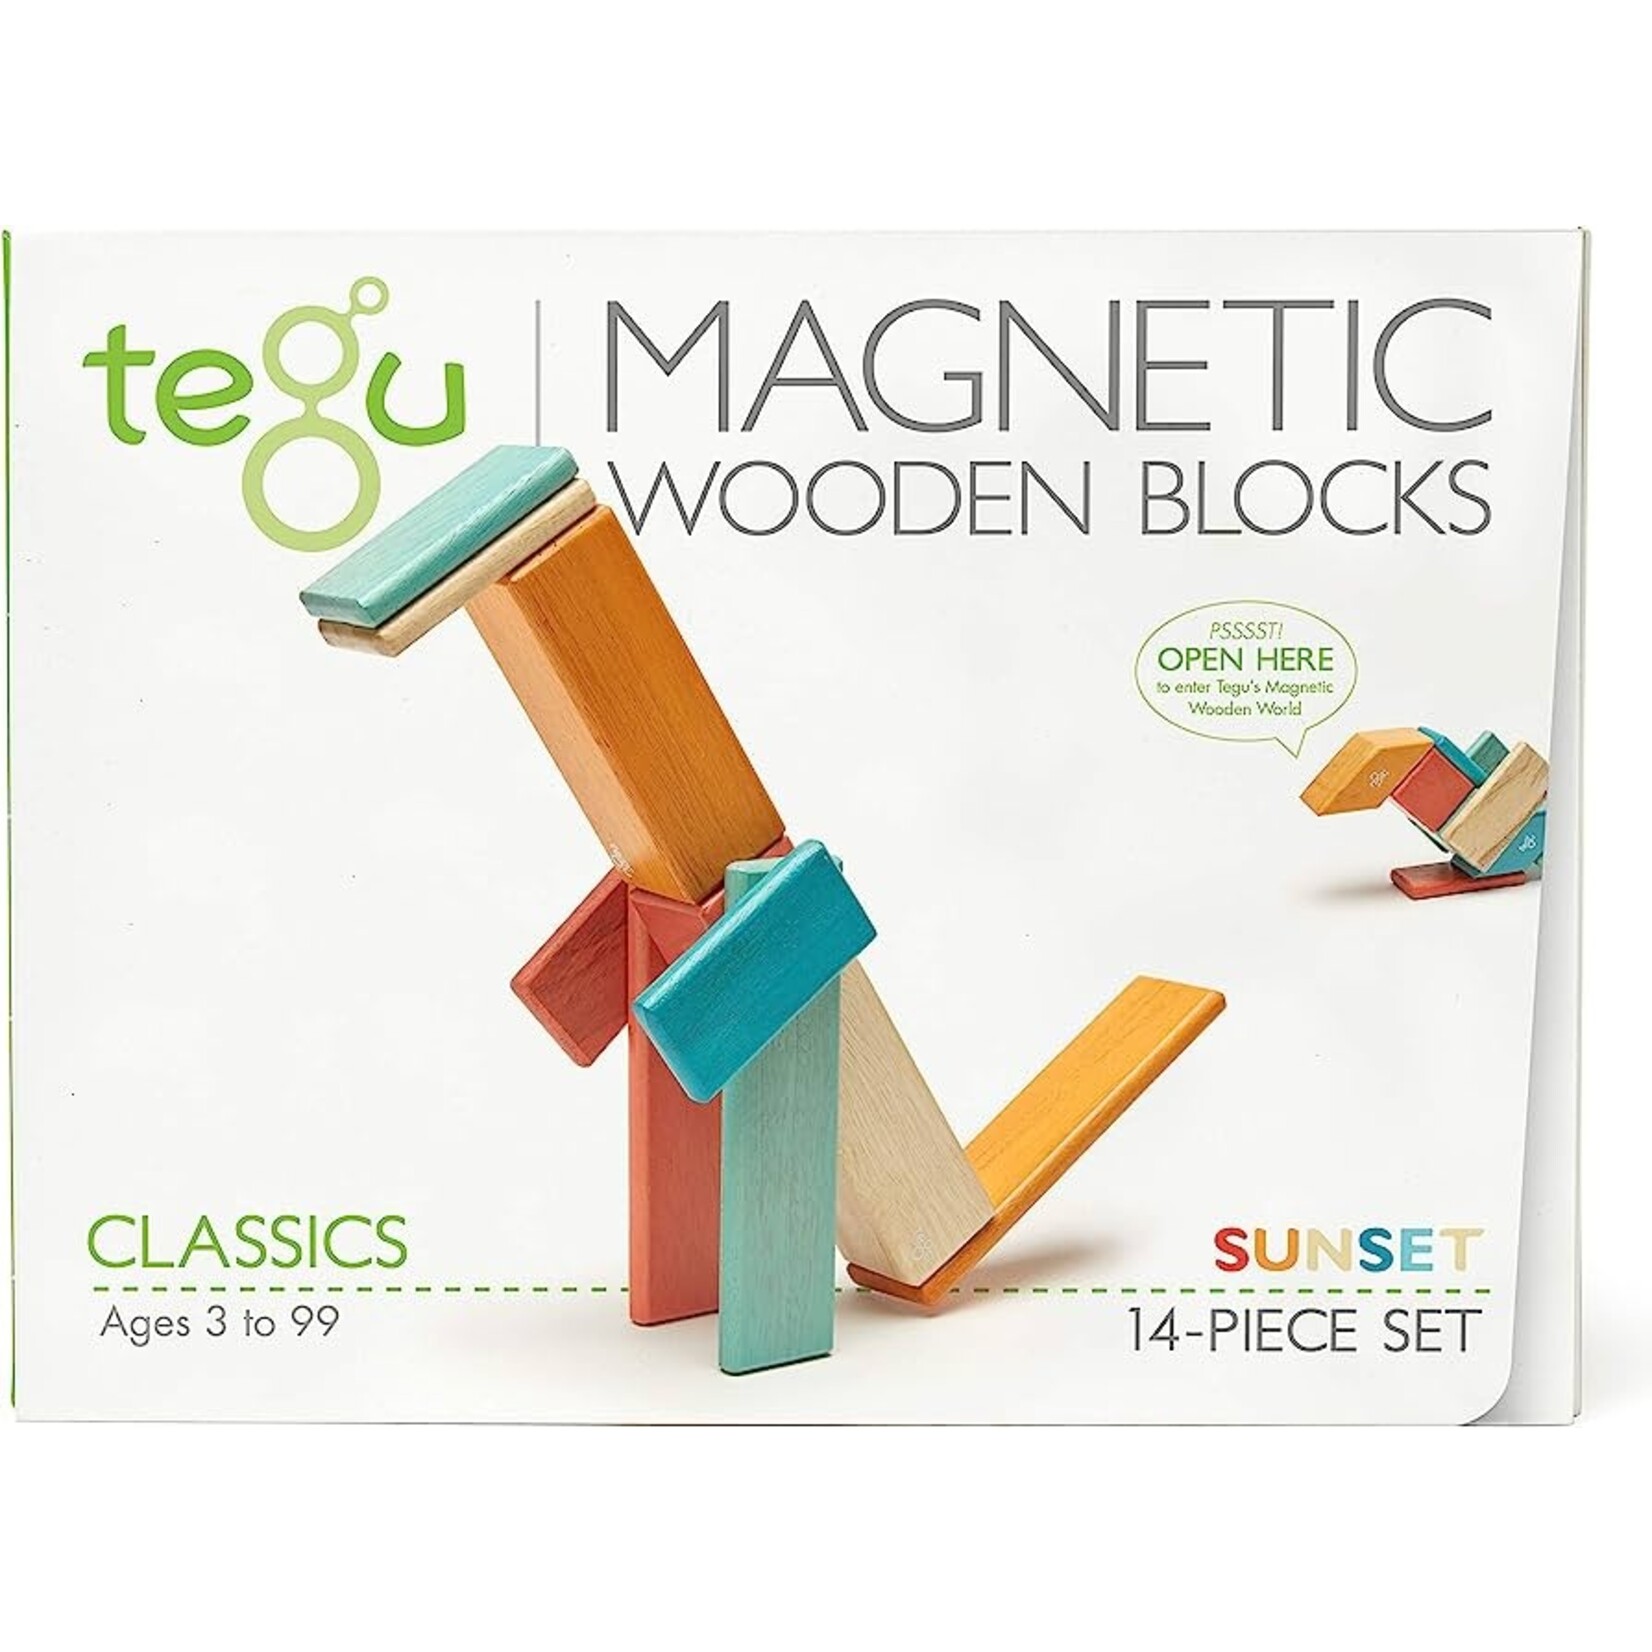 Sunset - 14-Piece Set Magnetic Wooden Blocks 1+